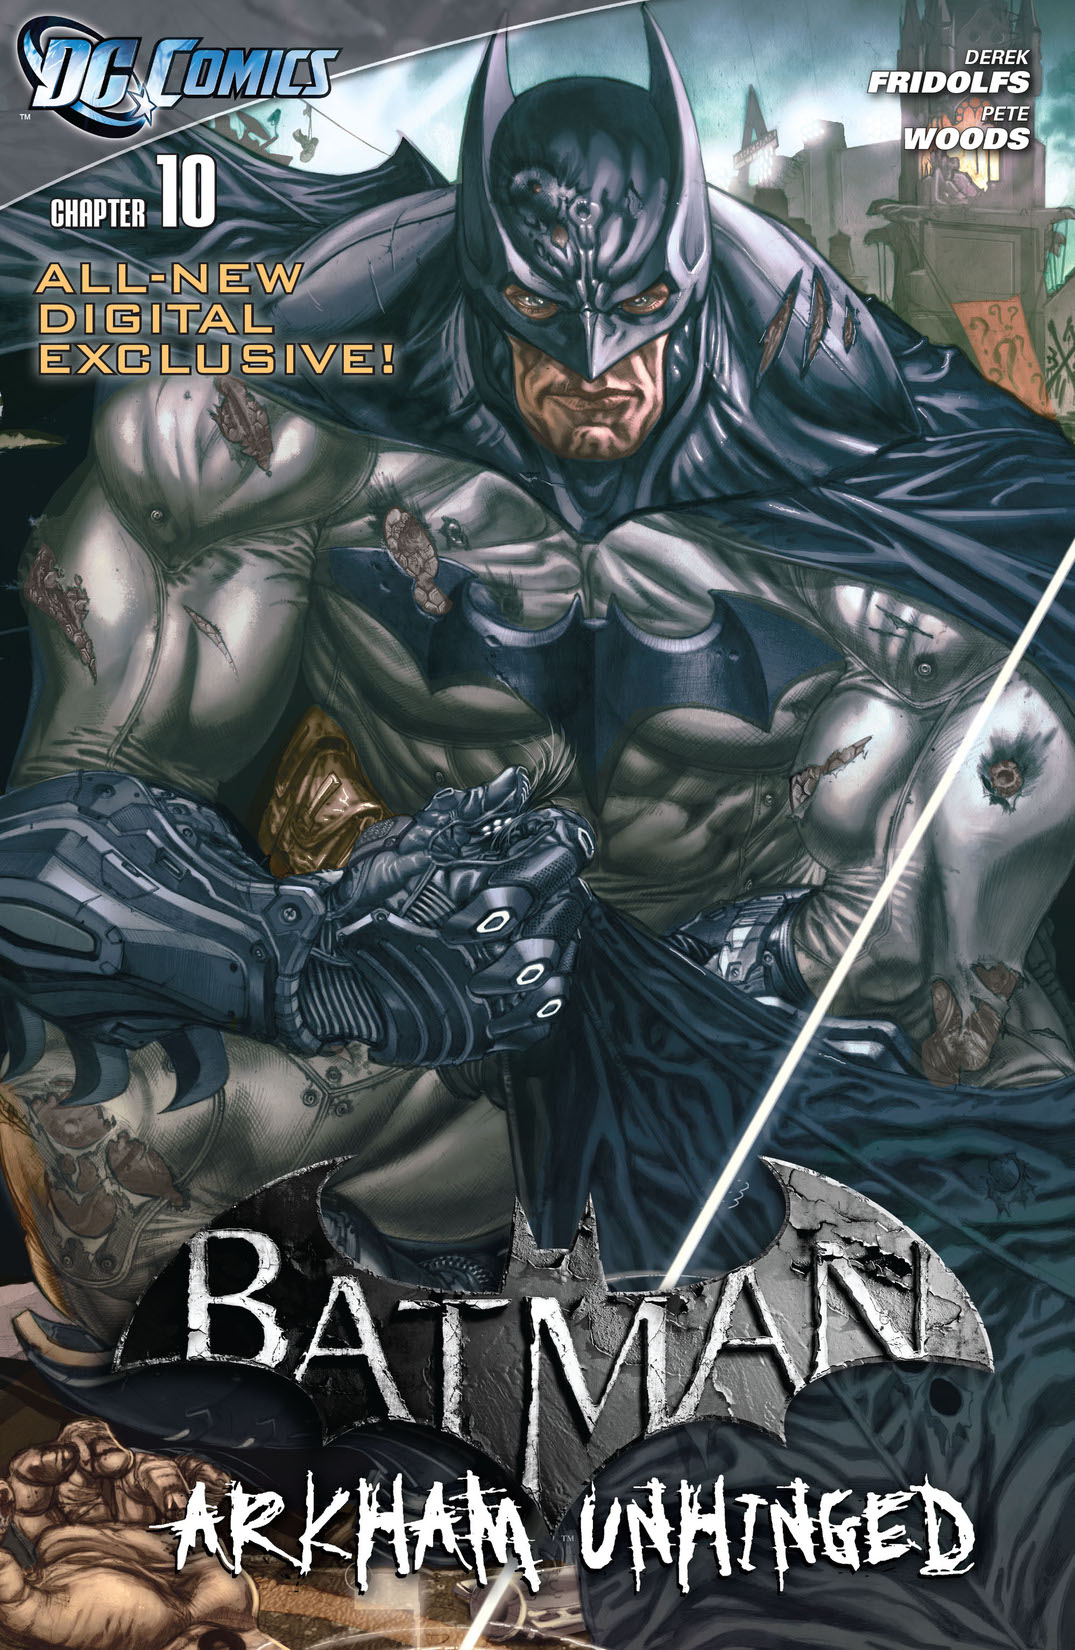 Batman: Arkham Unhinged #10 preview images